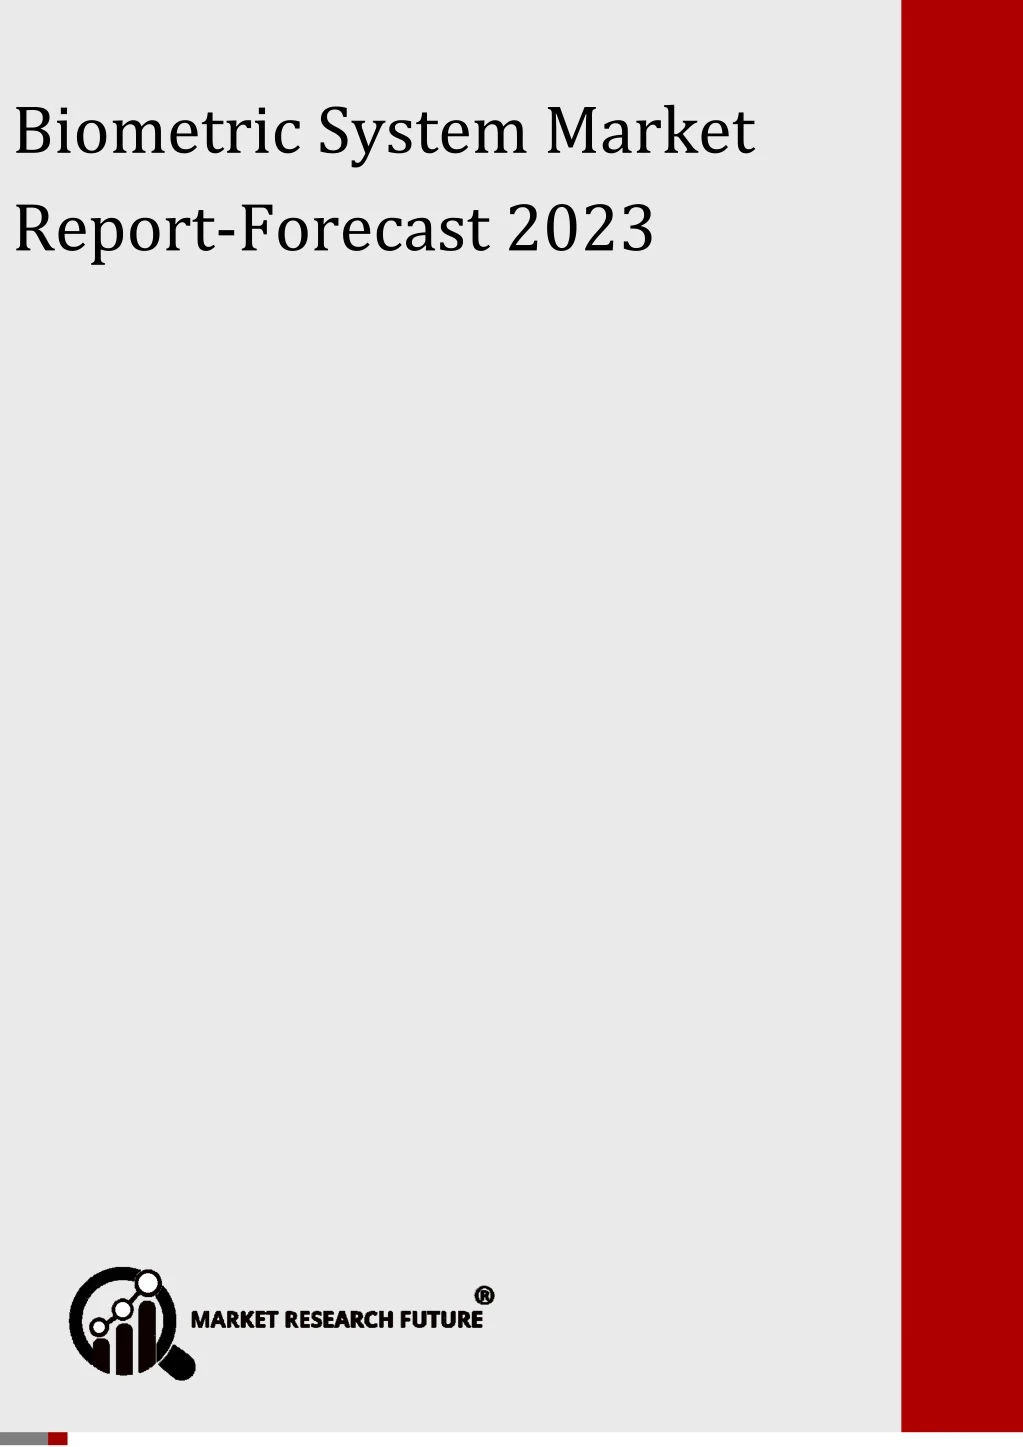 global biometric system market forecast 2023